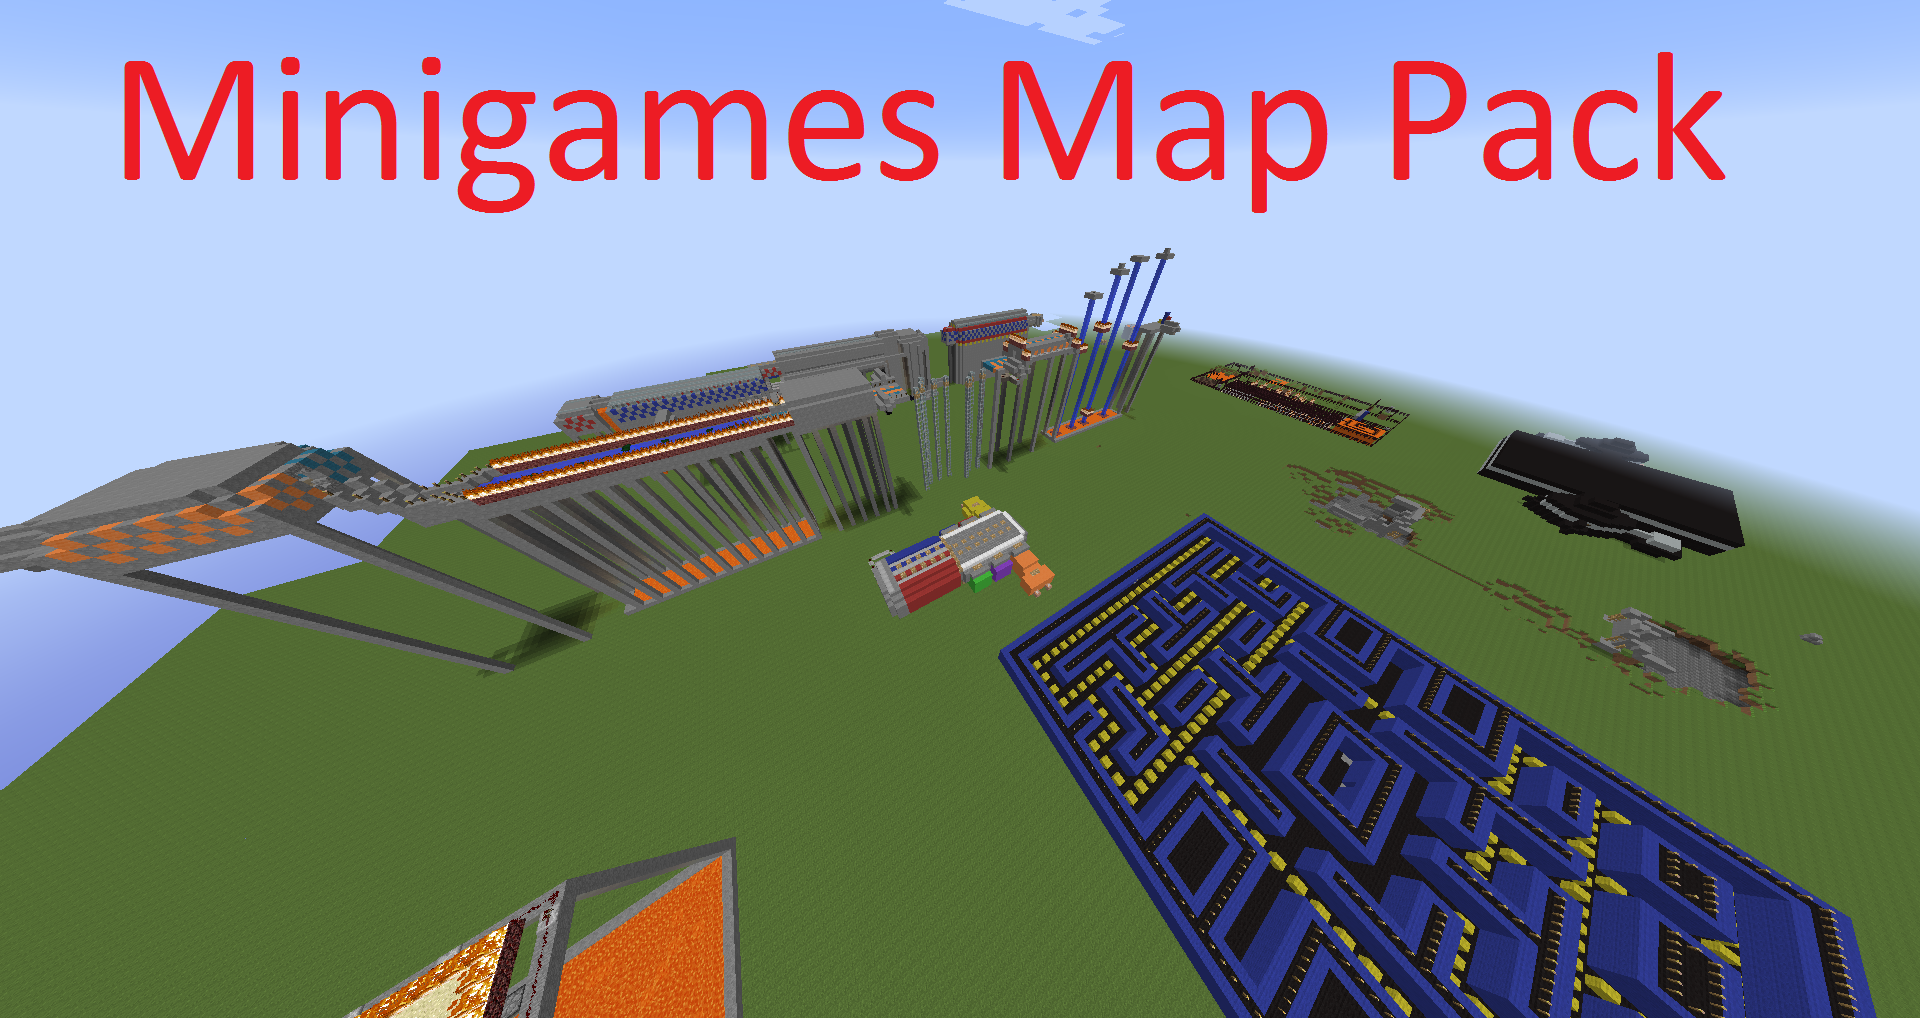 Minecraft Mini-Game Maps